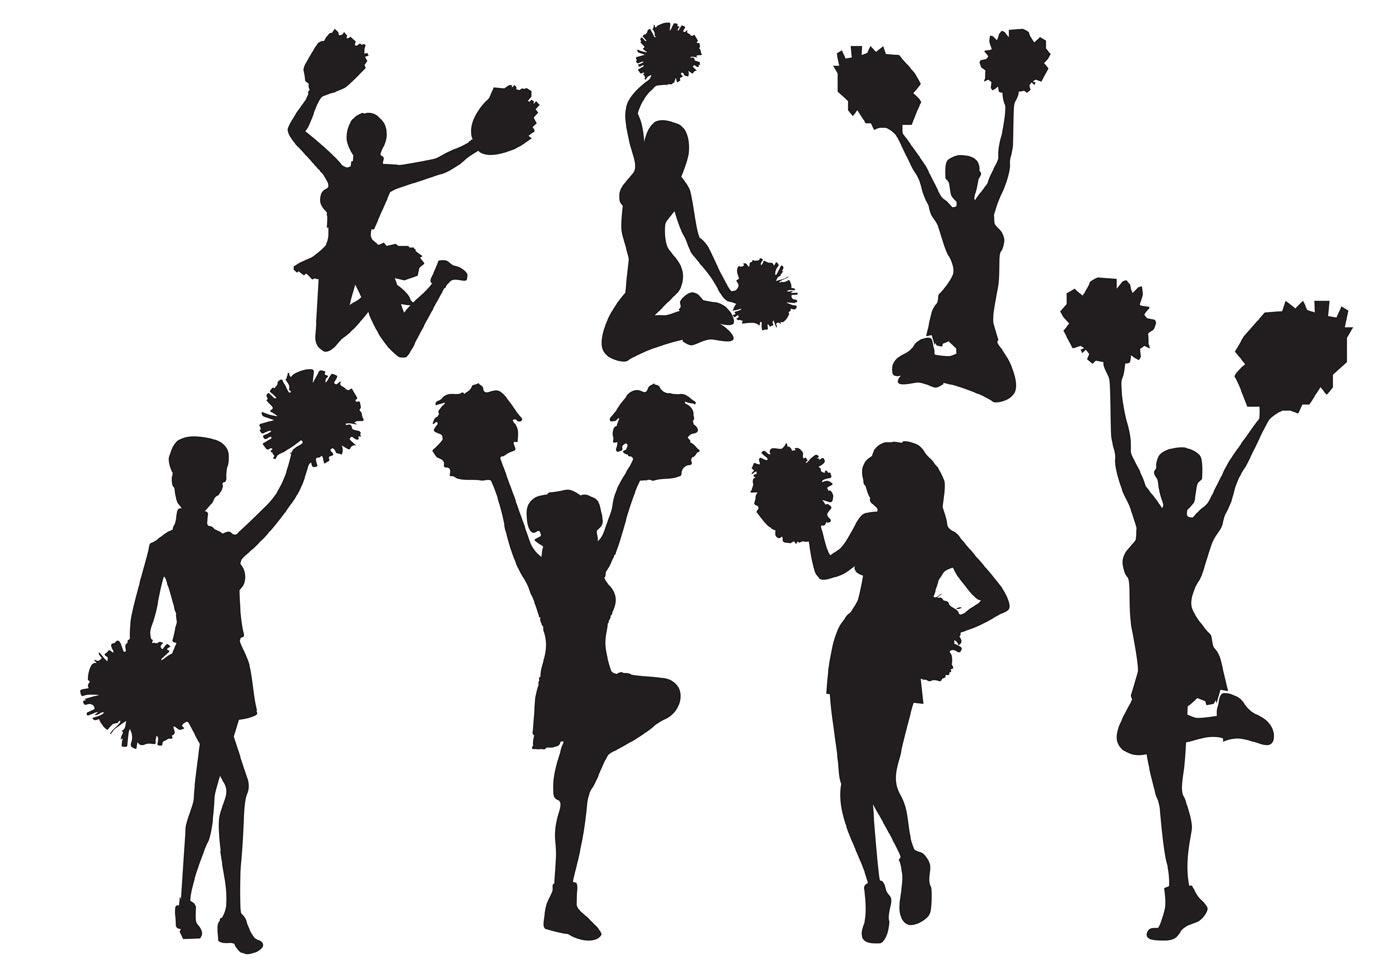 Free Vector Cheerleader Silhouette Set - Download Free Vector Art, Stock Graphics & Images